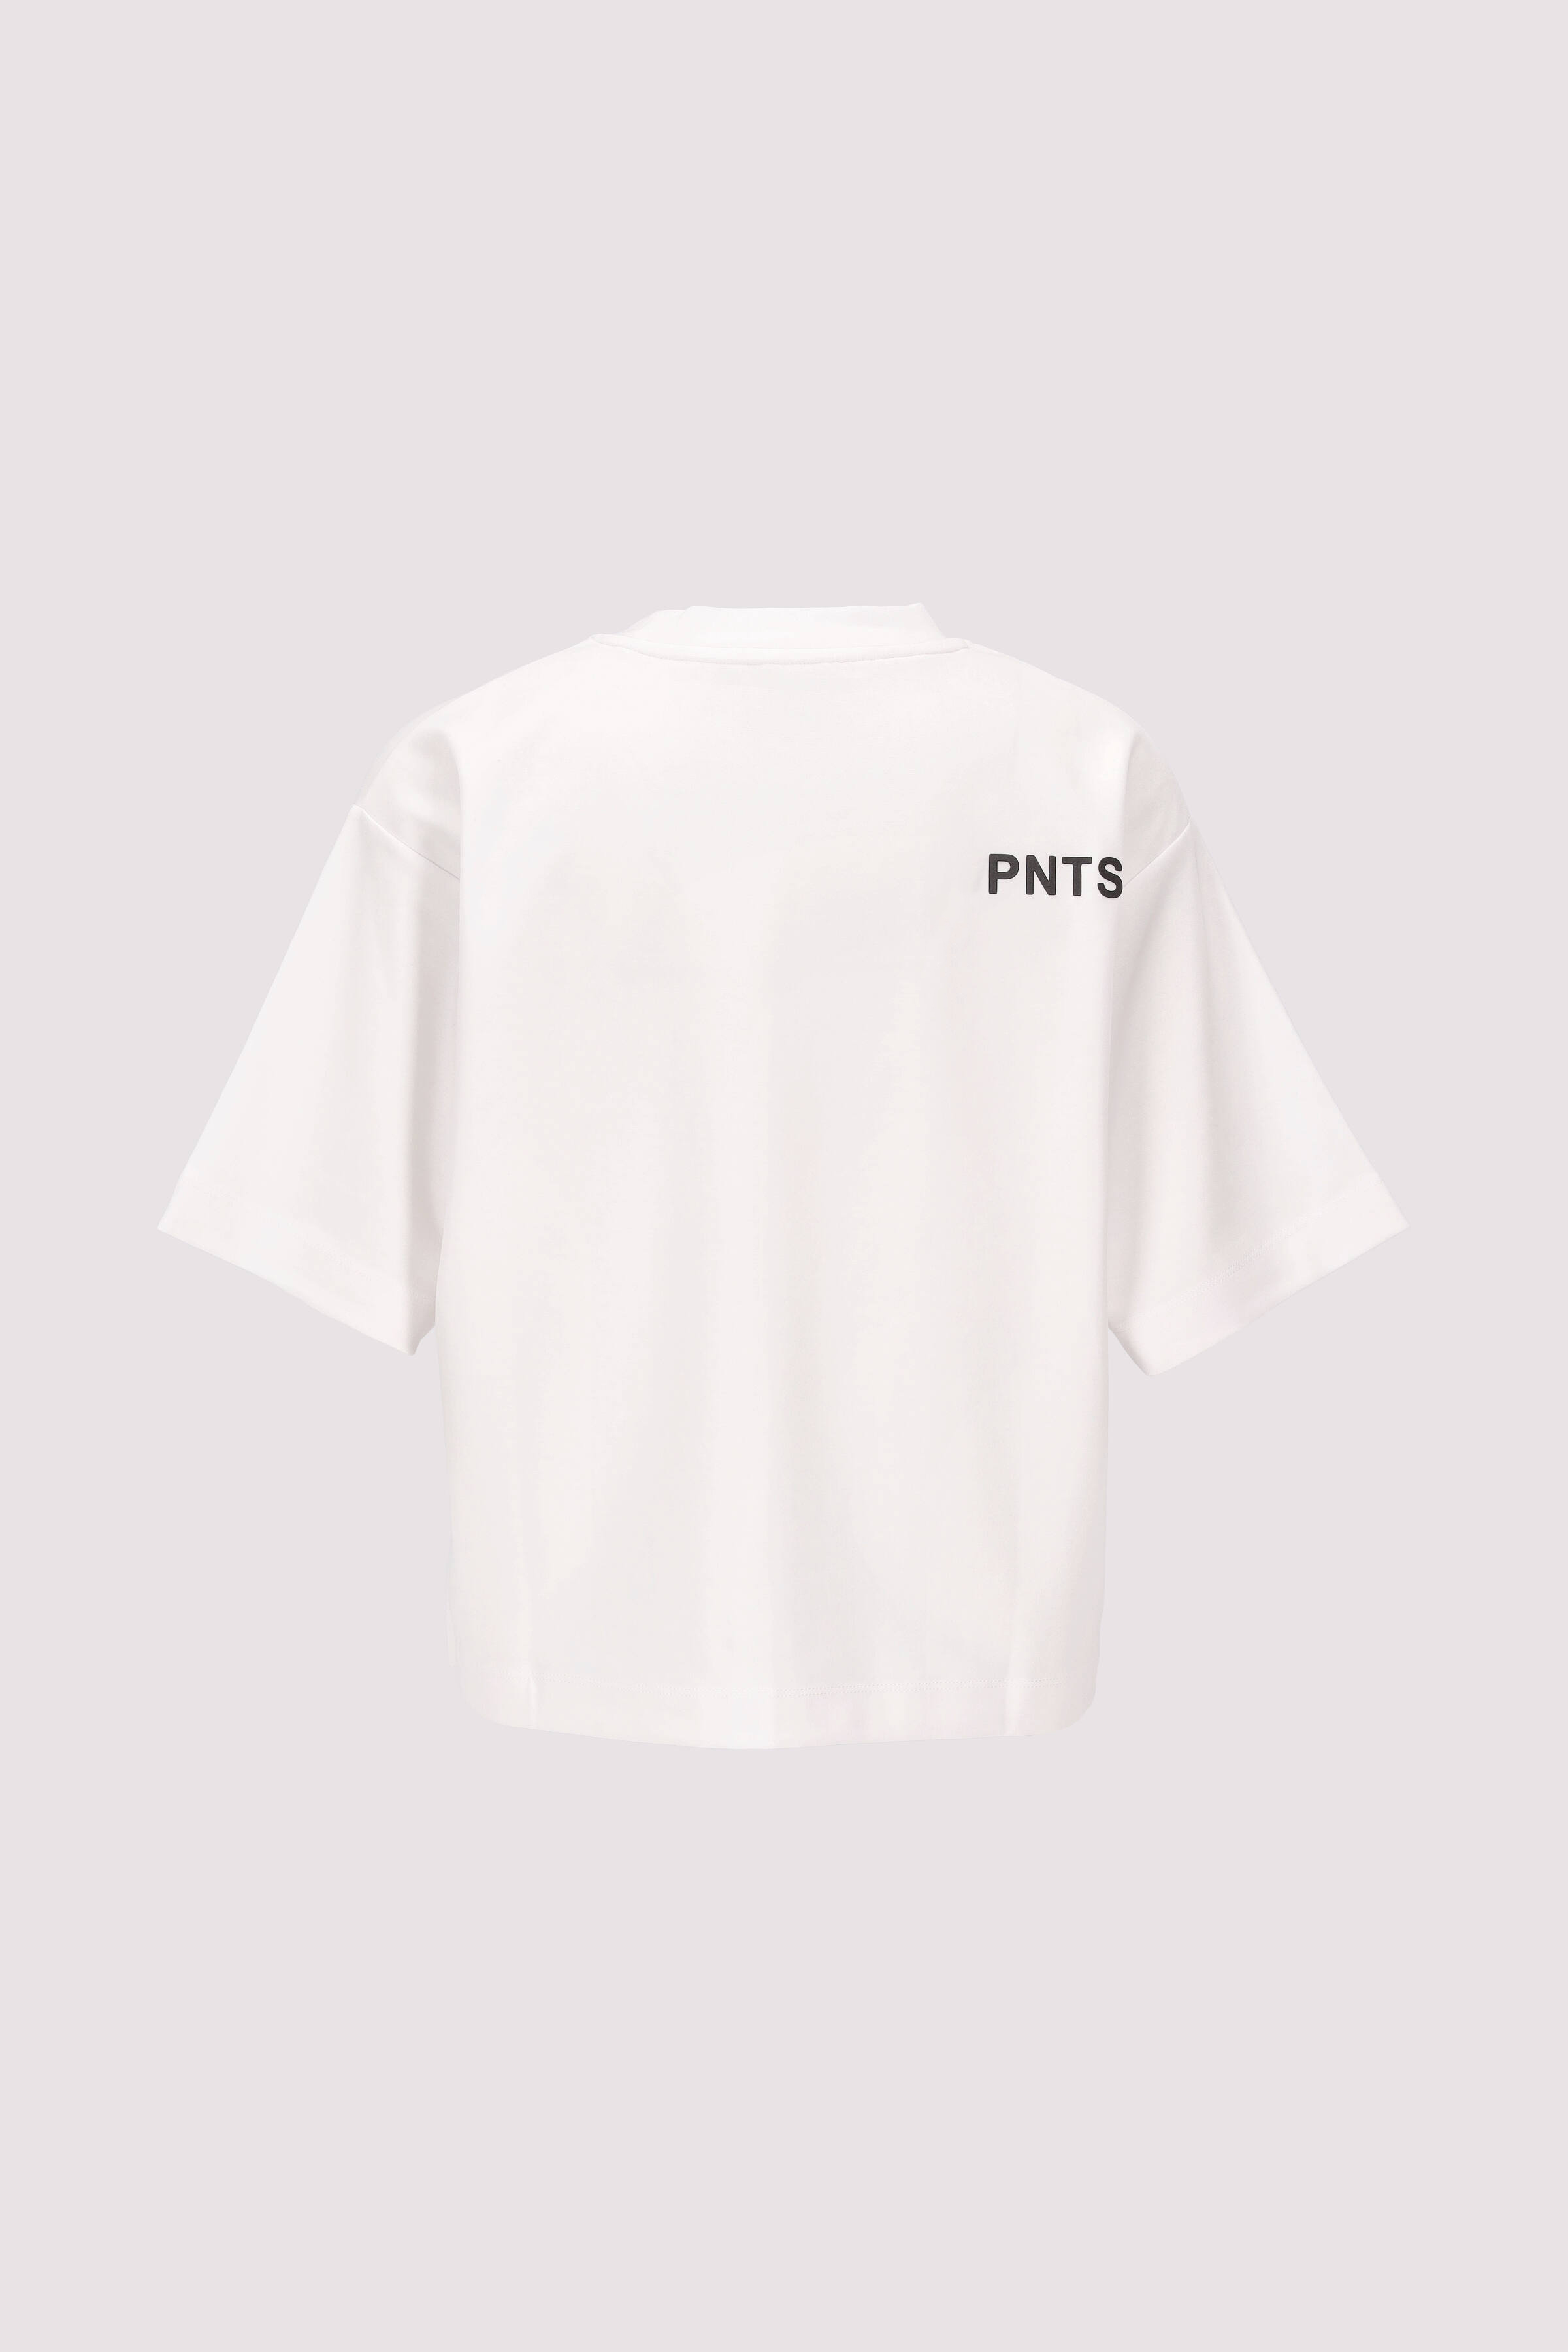 PNTS T-Shirt